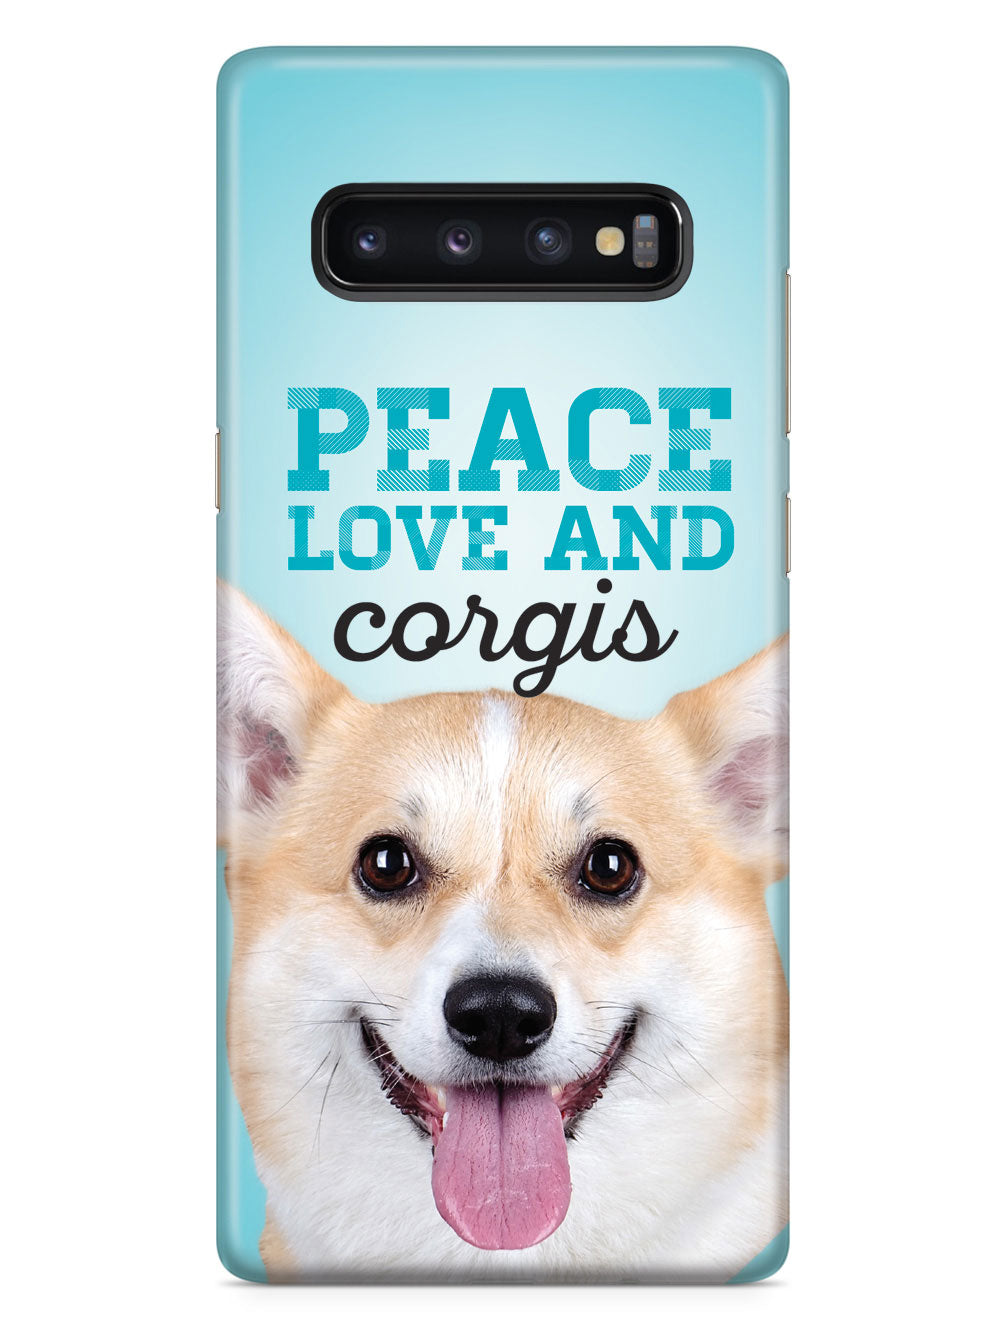 Peace Love and Corgis - Real Life Case